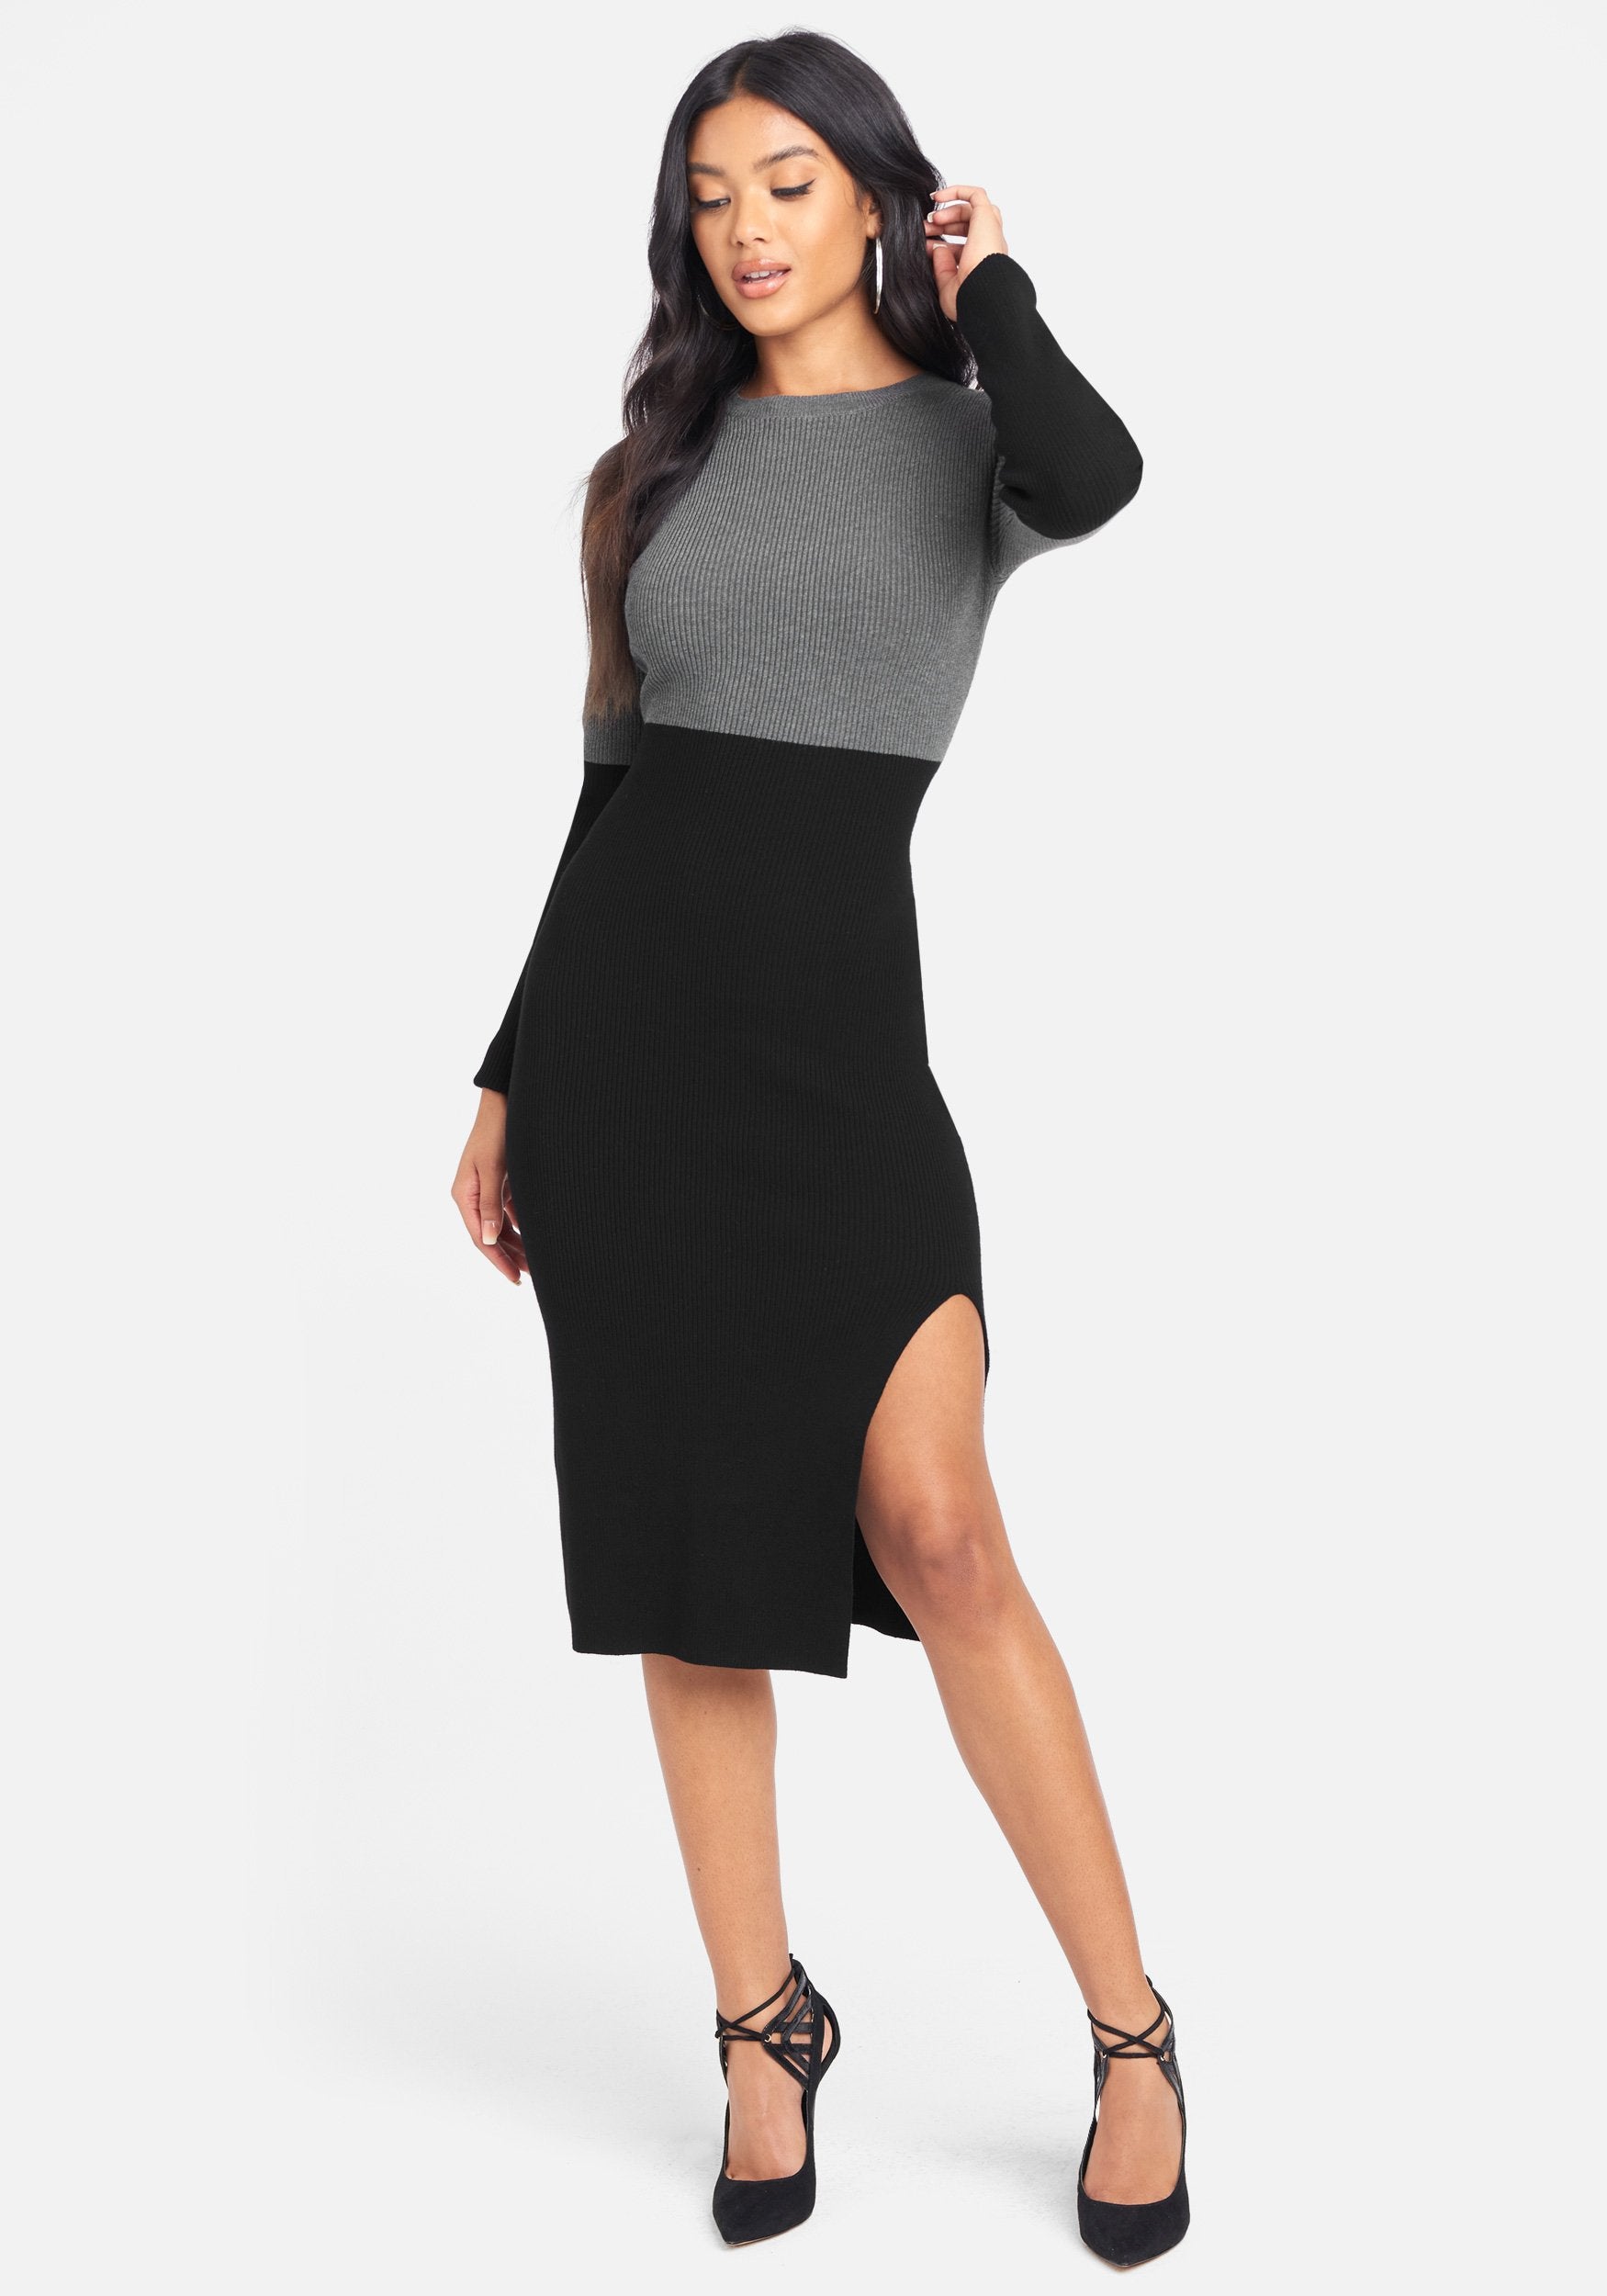 Bebe Women's Two Tone Dress, Size Medium in Charcoal Viscose